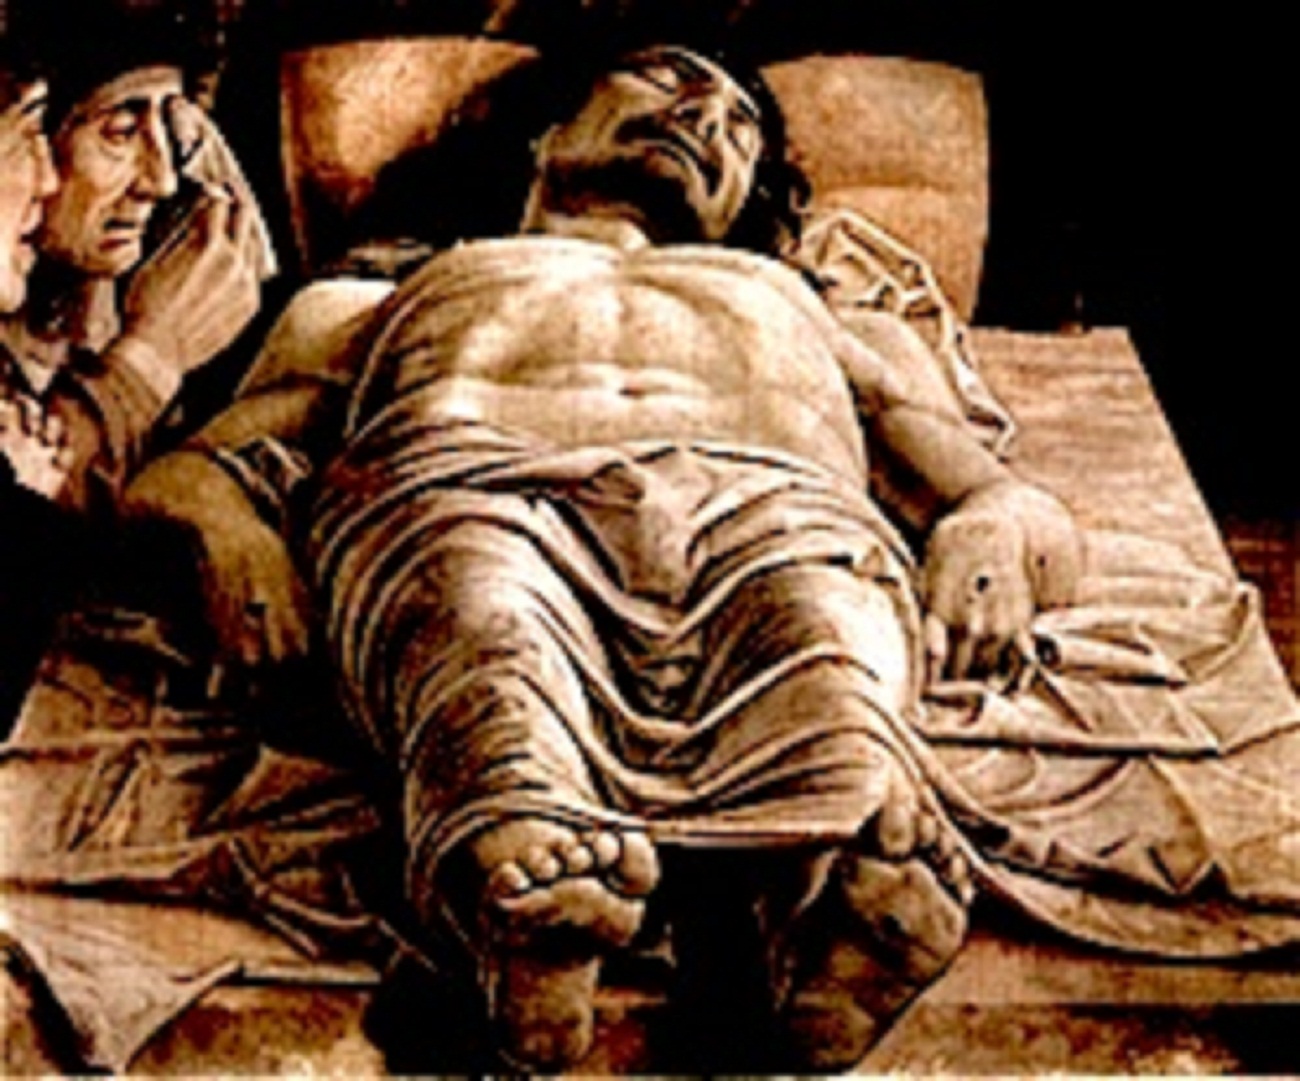 "Dead Christ" by Mantegna (c. 1500)